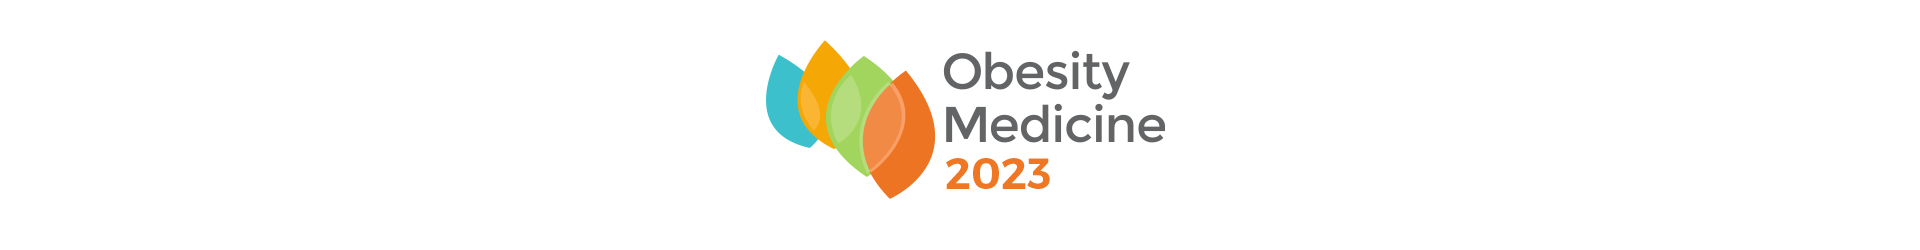 Obesity Medicine 2023 Event Banner